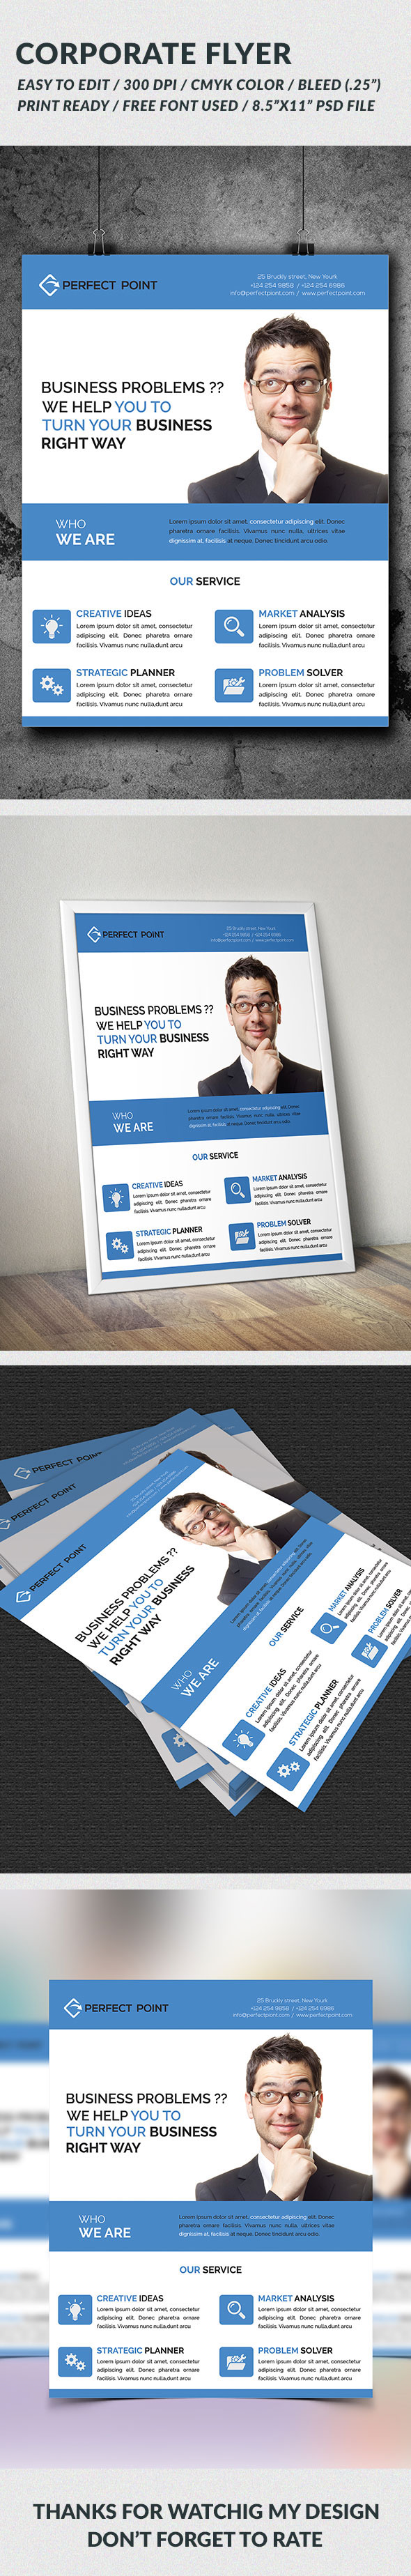 flyer corporate flyer creative flyer bundle print ready design color blue business Multipurpose Office add a4 help